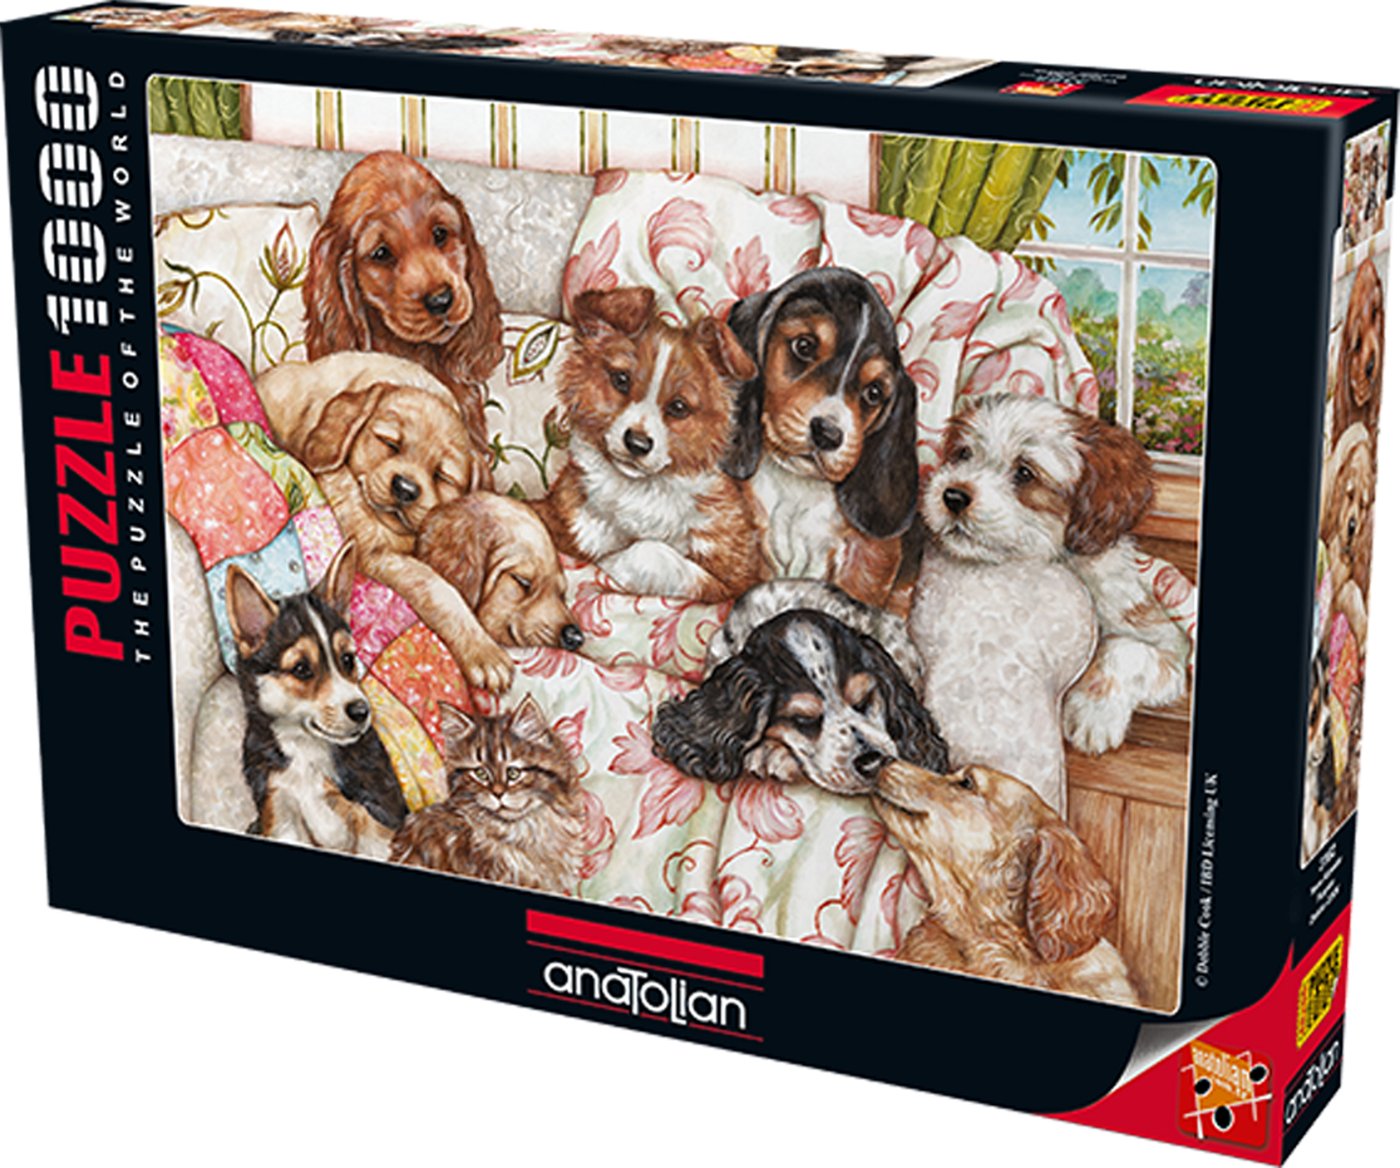 Anatolian - The puppies - 1000 Piece Jigsaw Puzzle